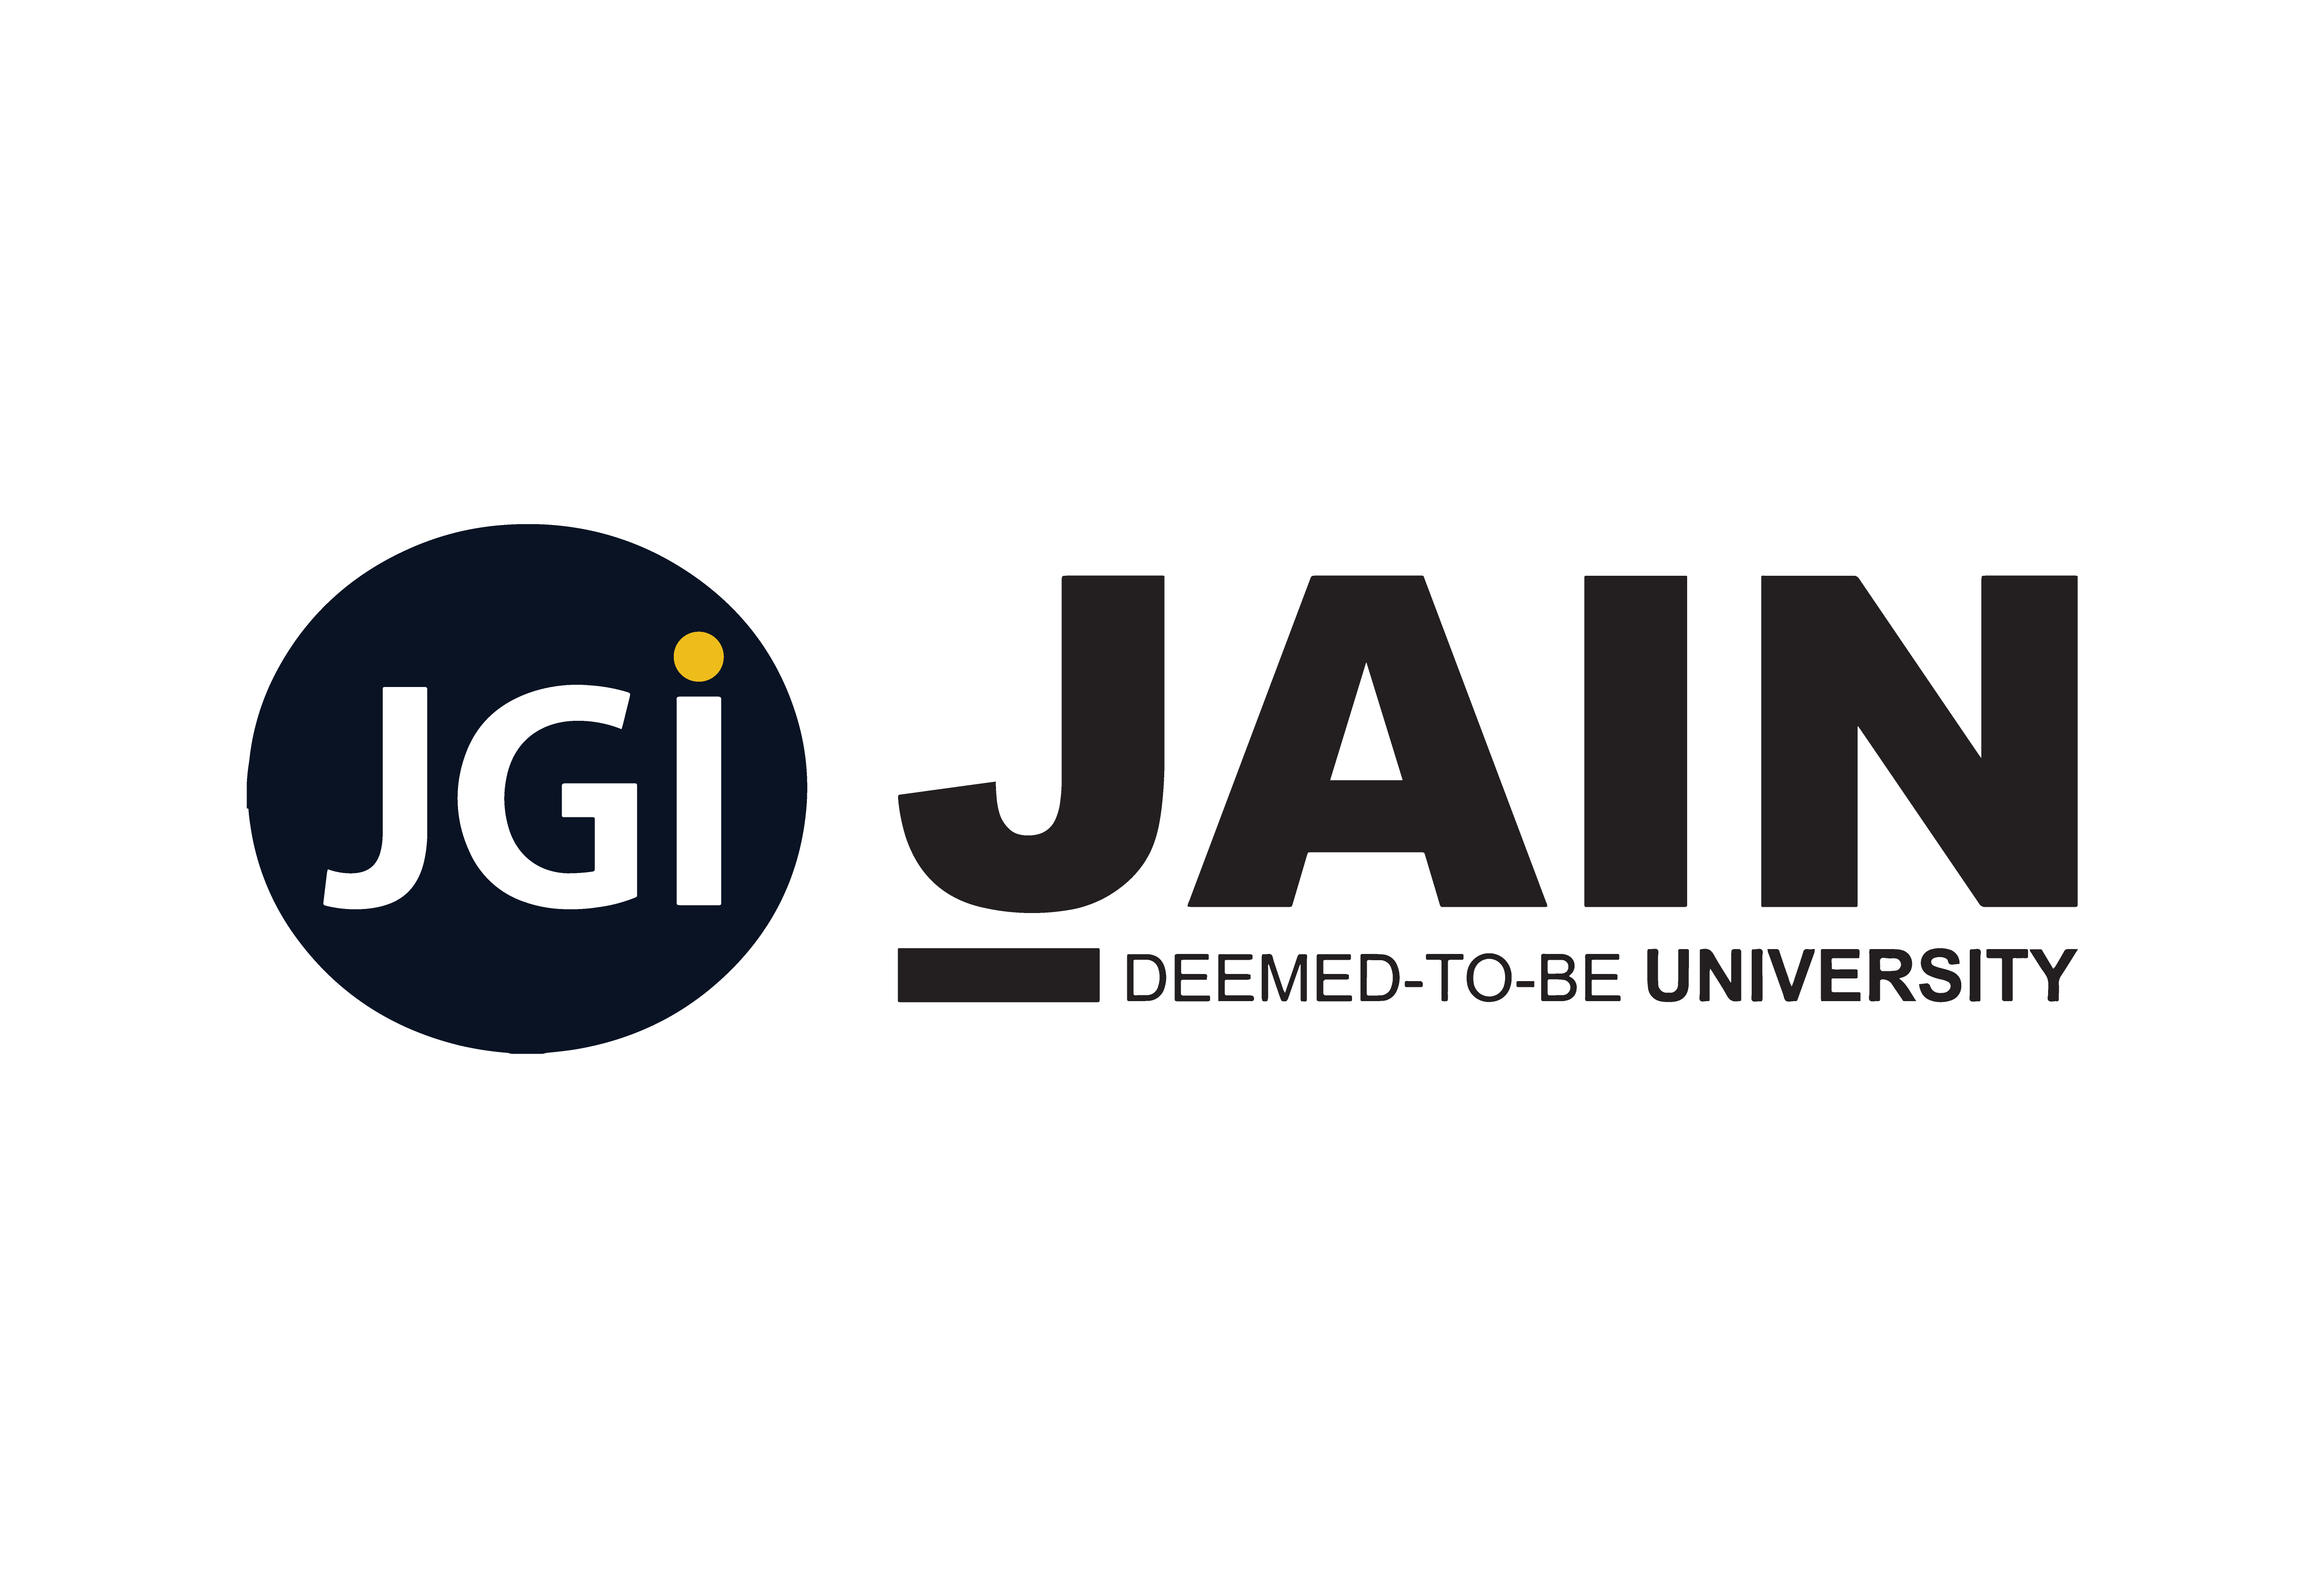 JGI Jain University